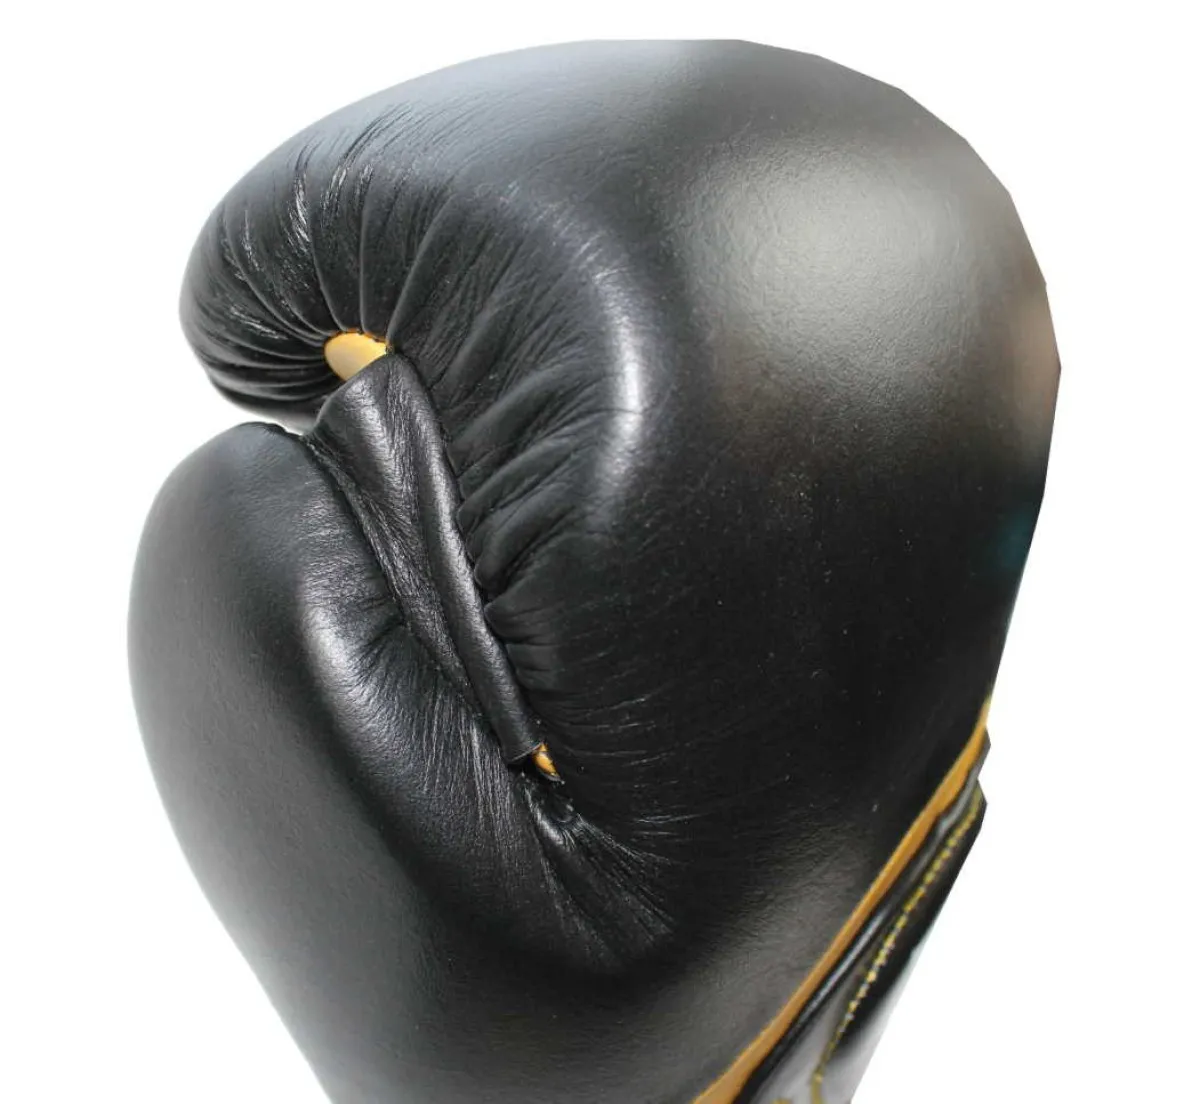 Boxing gloves BAT white/black